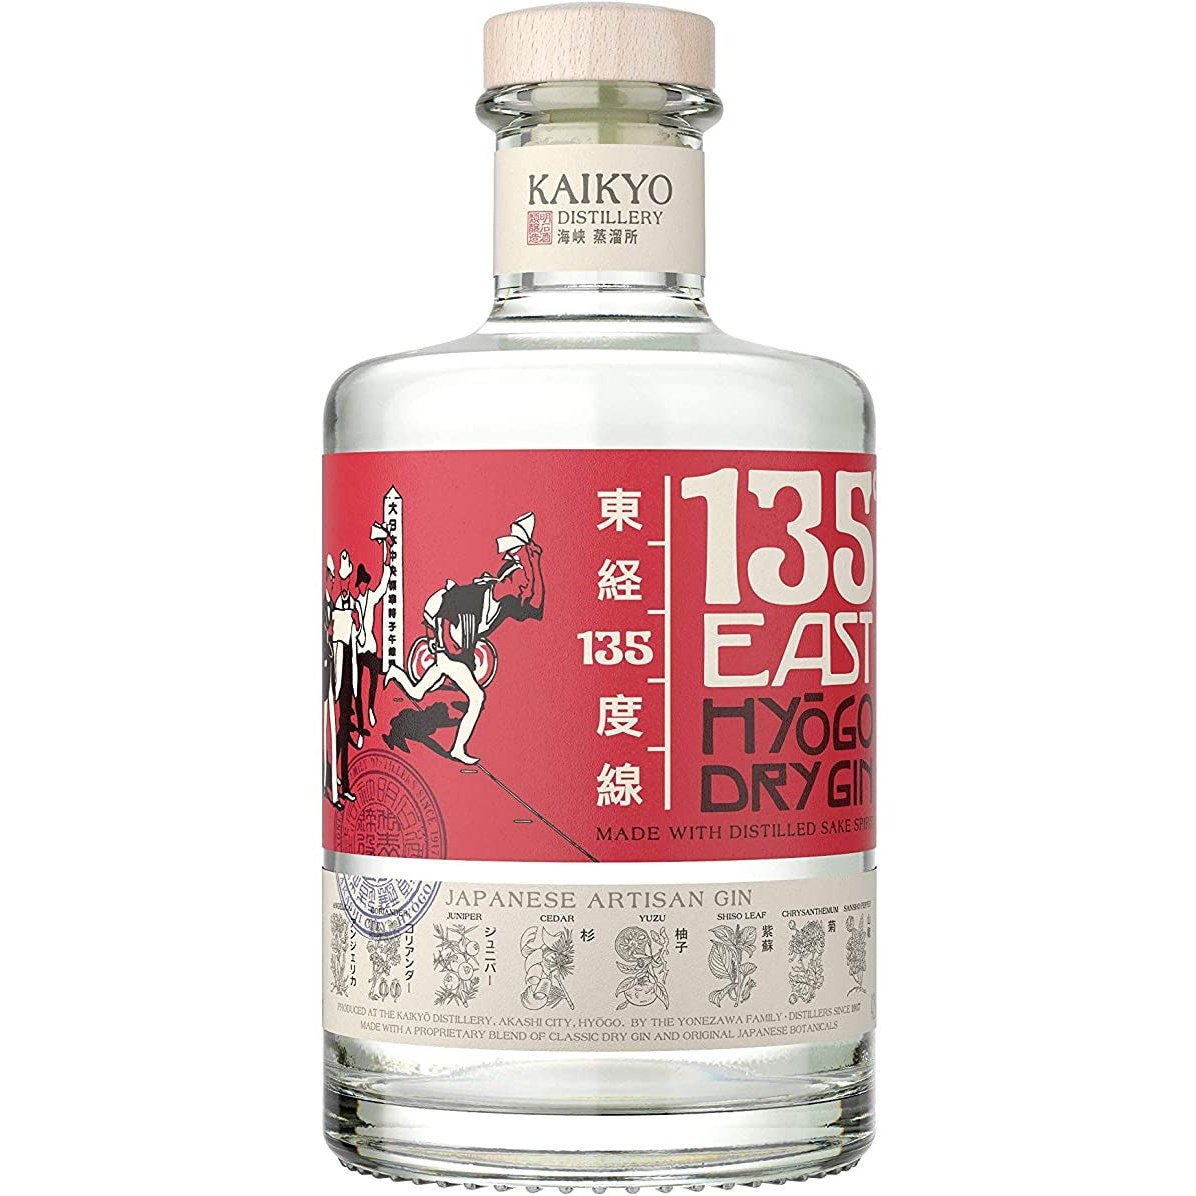 135 East Hyogo Dry Japanese Gin 750ml